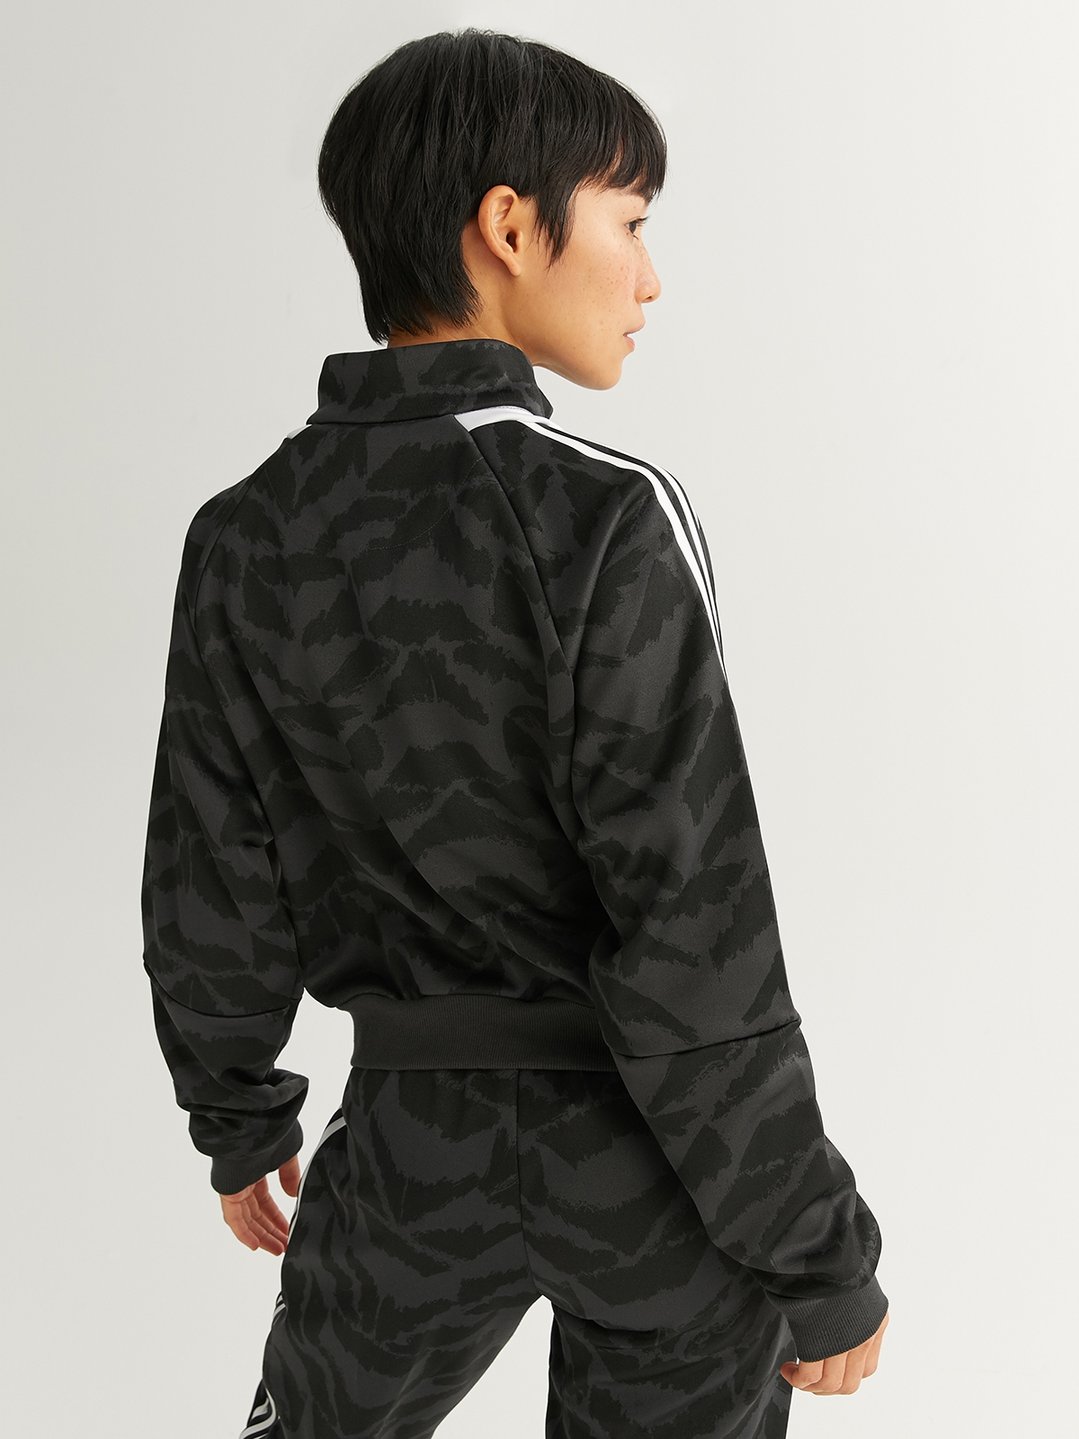 Tiro Suit Up Fashion Carbon/Black/White - Pomelo Top Track Lifestyle 